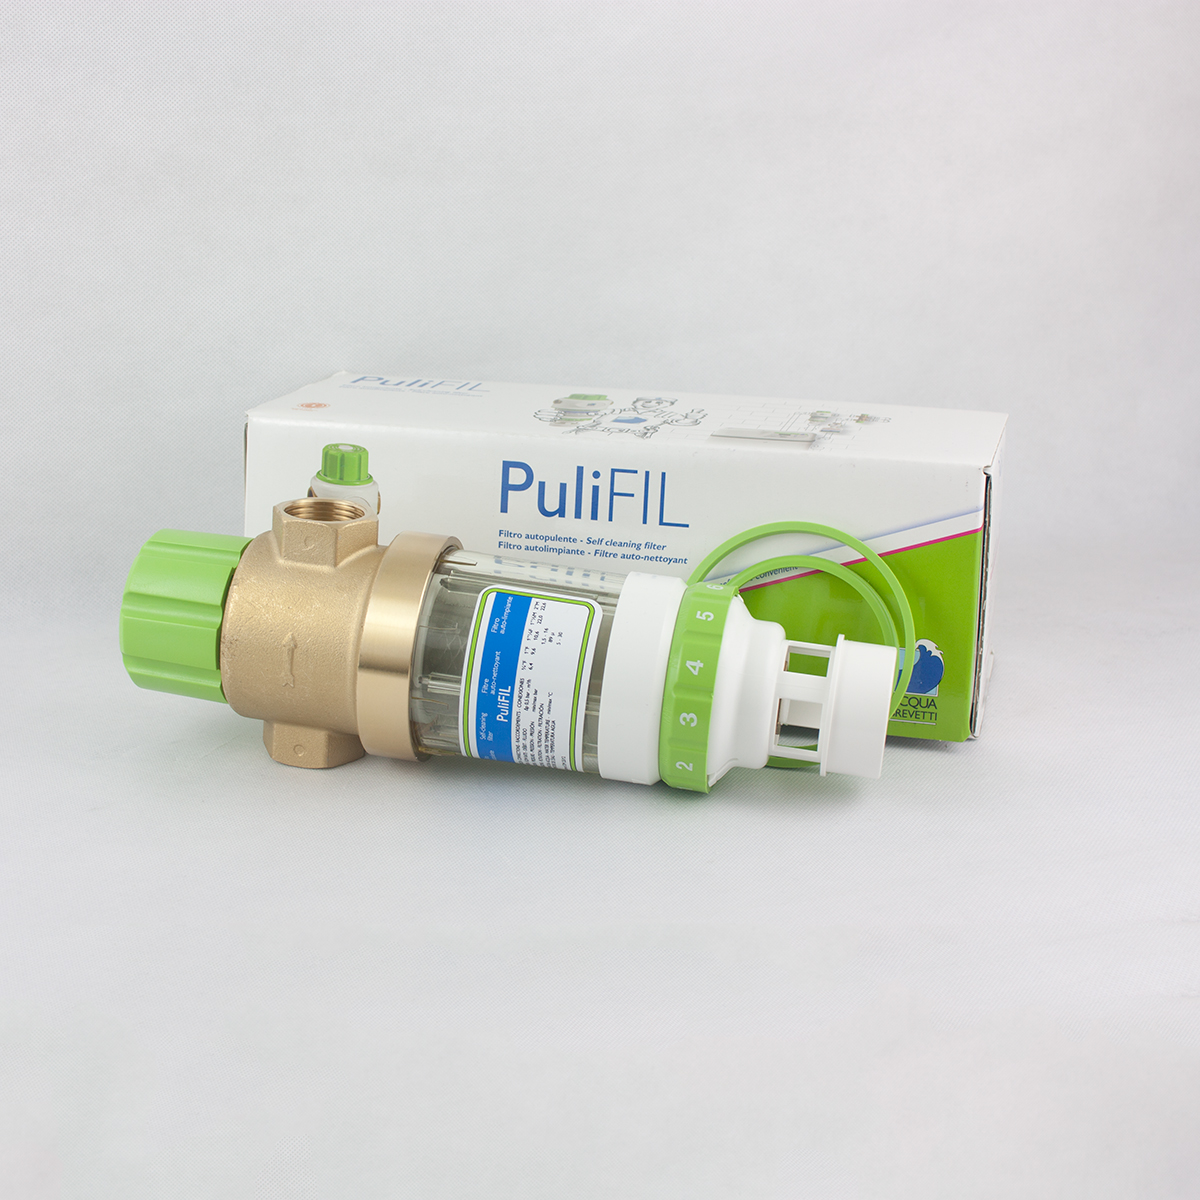 Cartridge filter housing - PuliFIL - ACQUA BREVETTI - for water